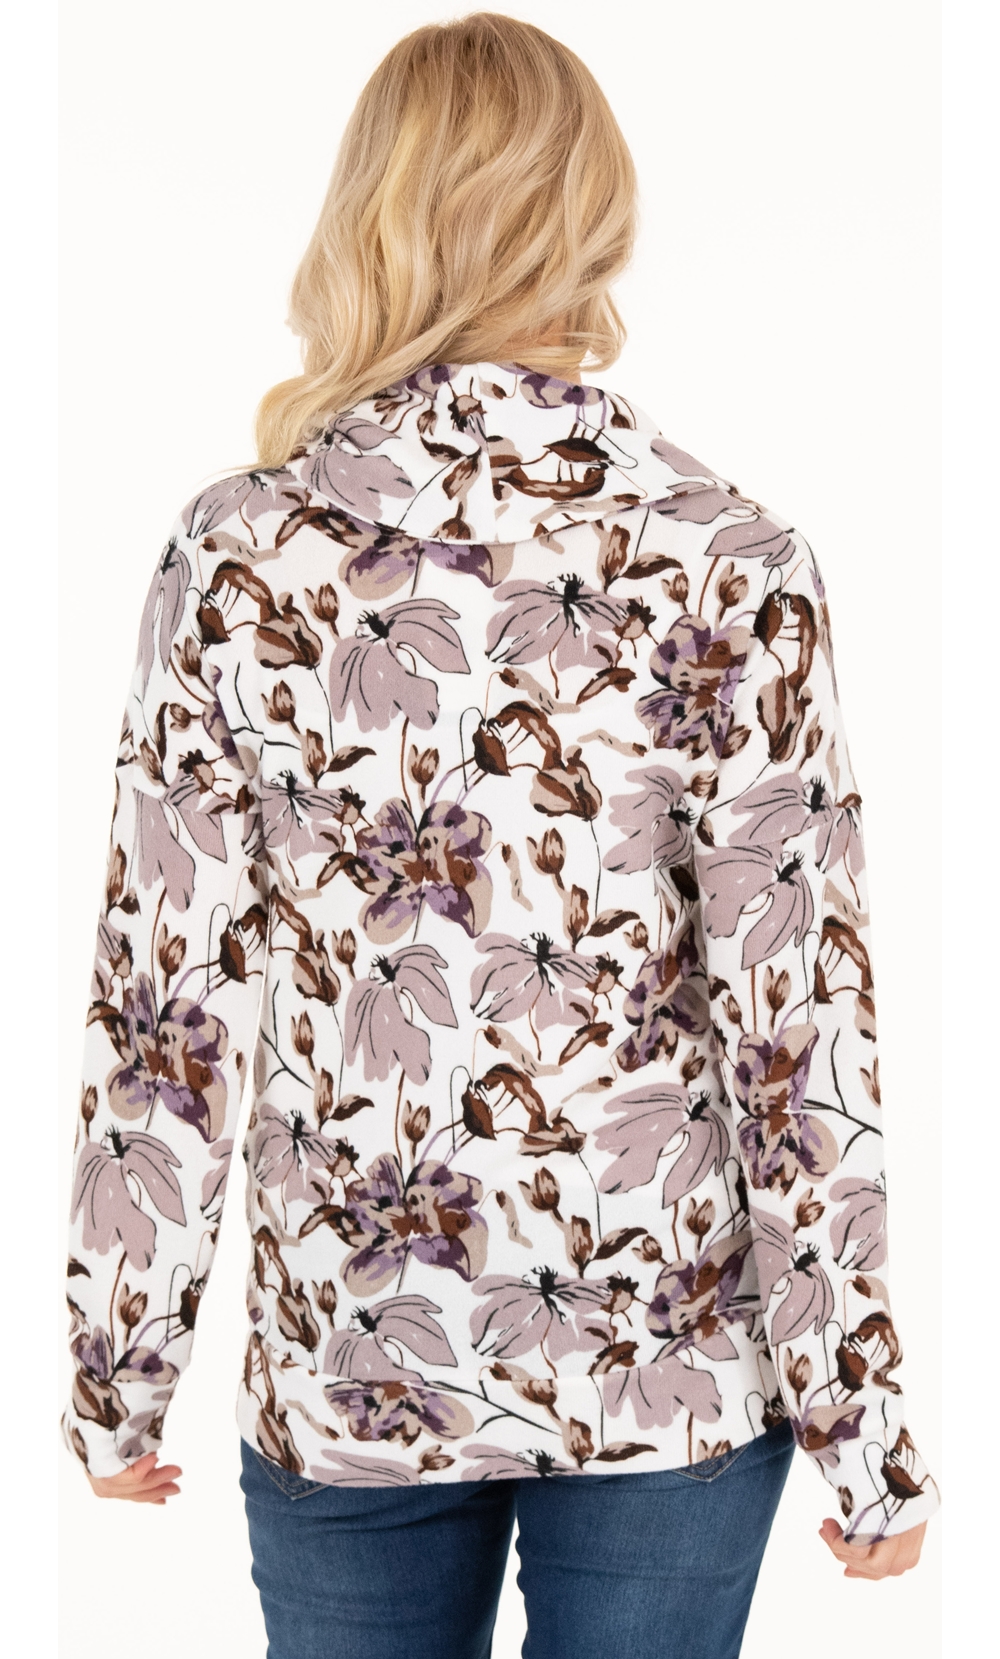 Supersoft Floral Printed Cowl Neck Sweatshirt